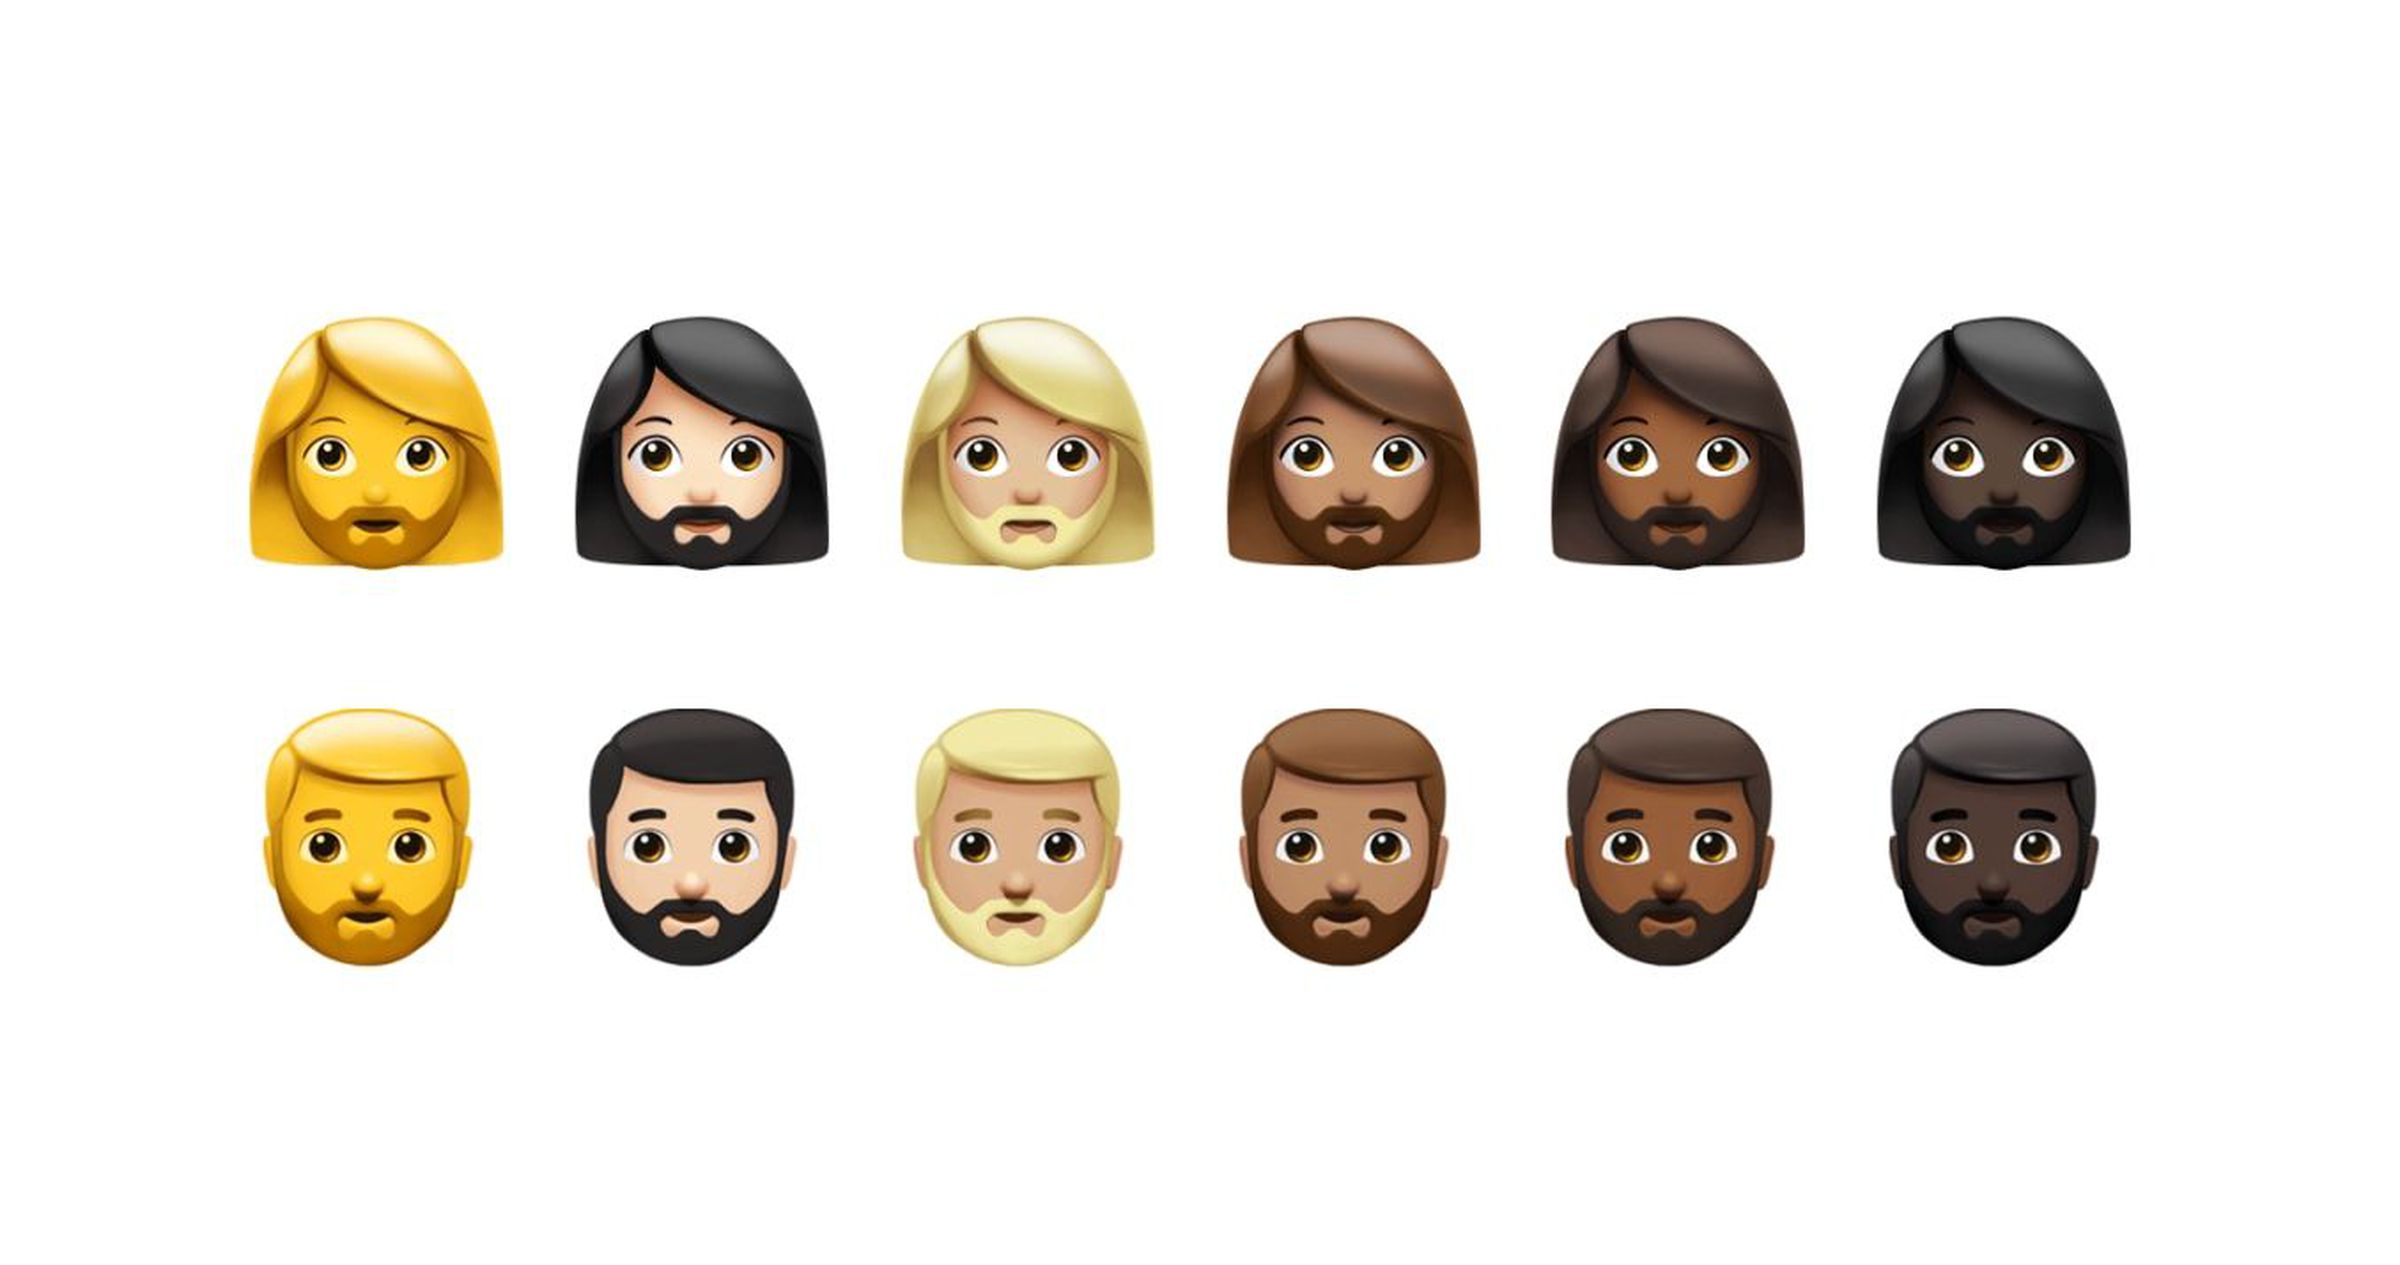 The various beard options in iOS 14.5.